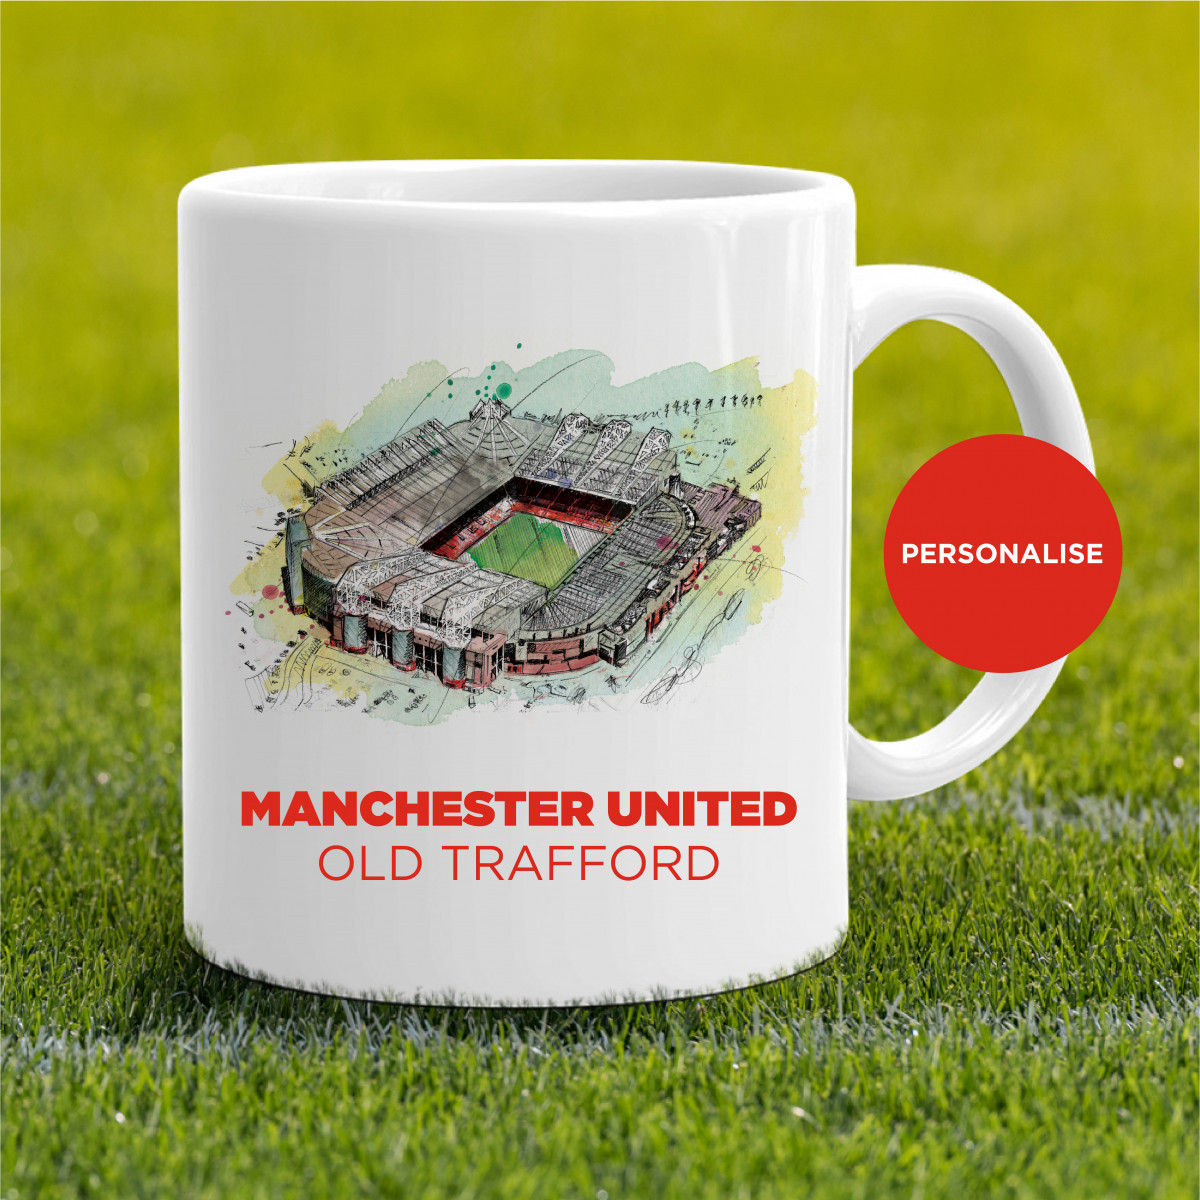 Manchester United - Old Trafford, personalised Mug